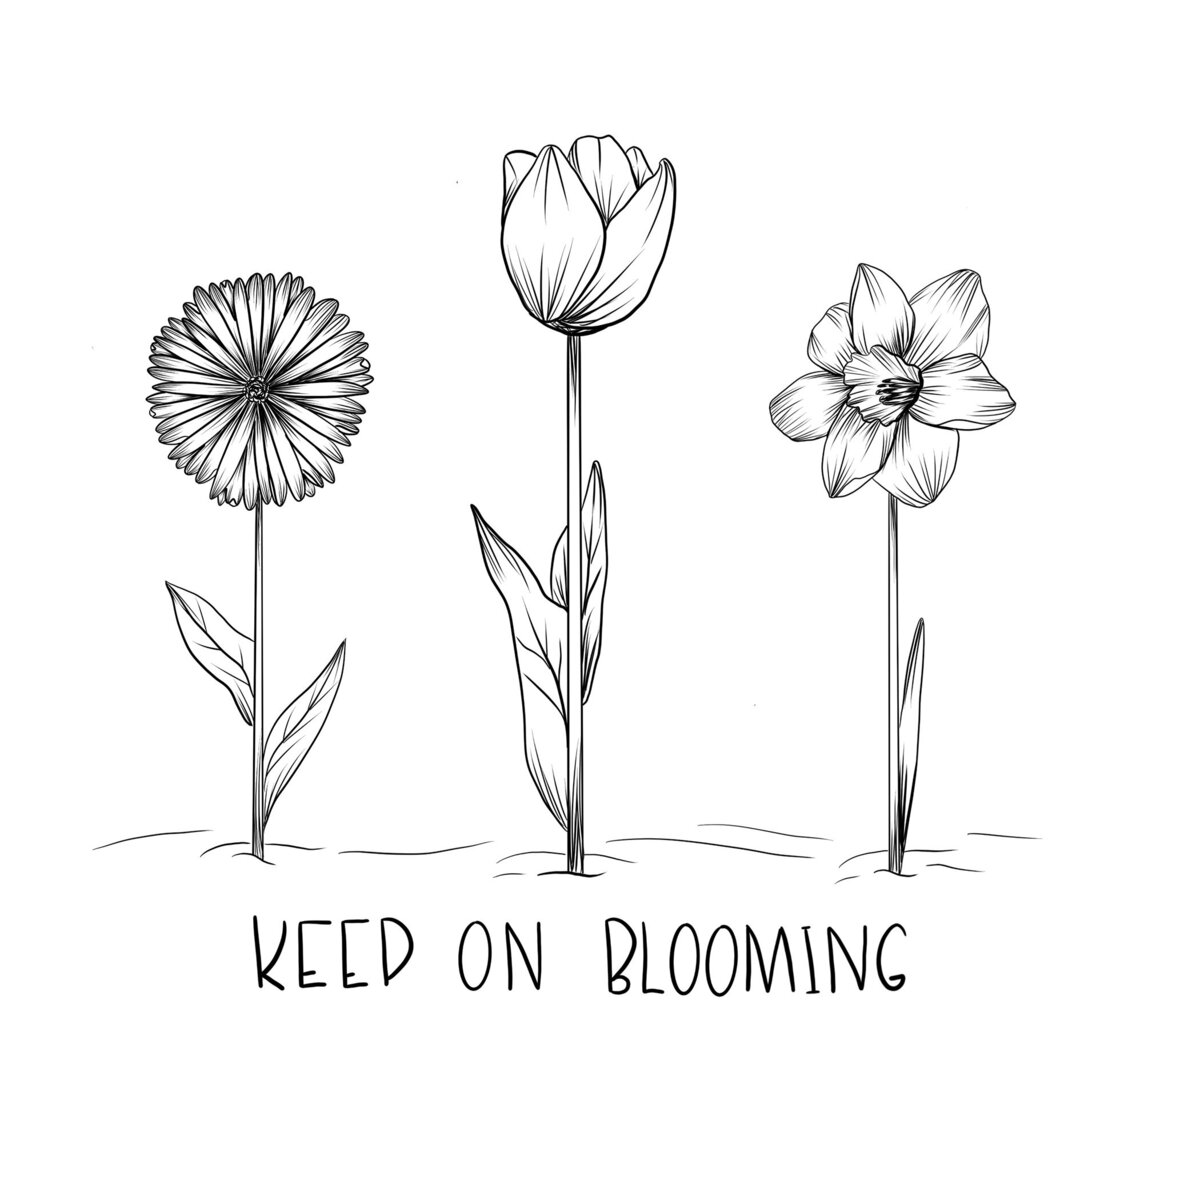 Keep blooming Small